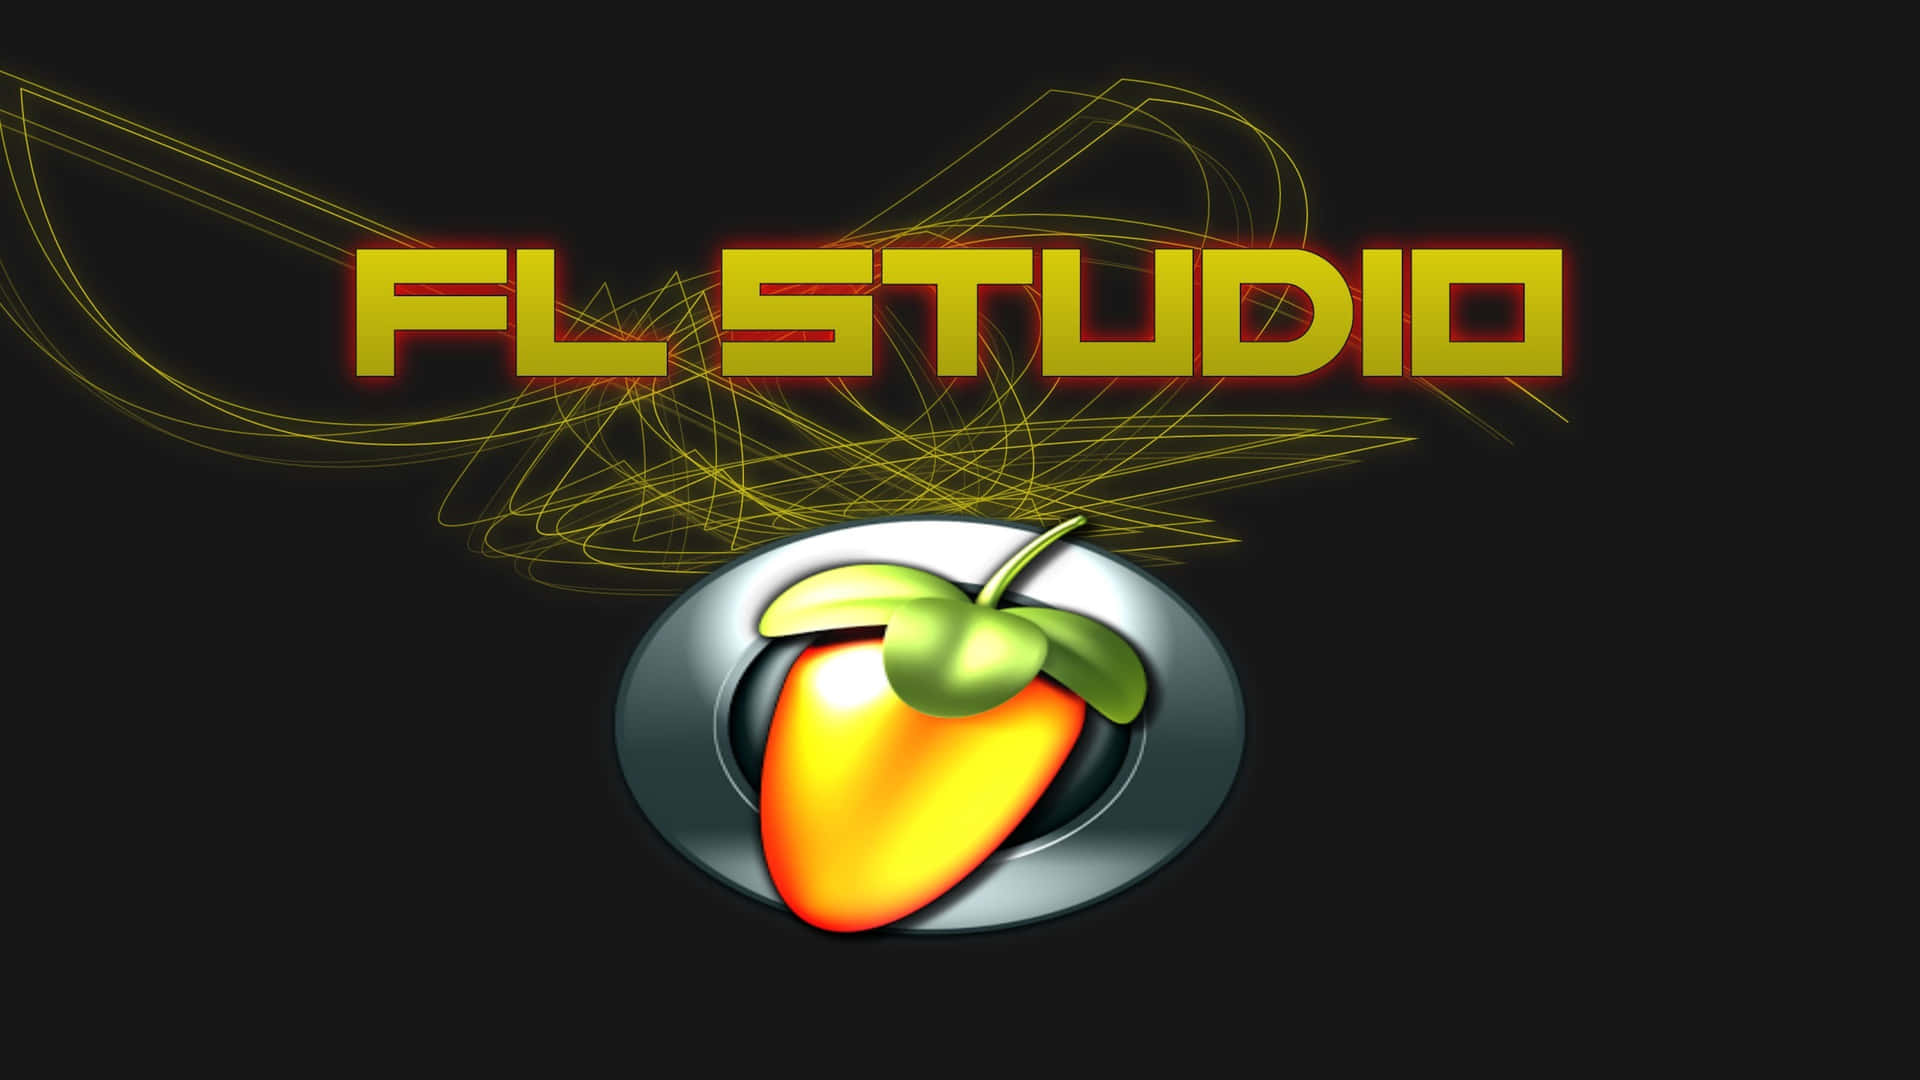 FL Studio Wallpapers Group 59